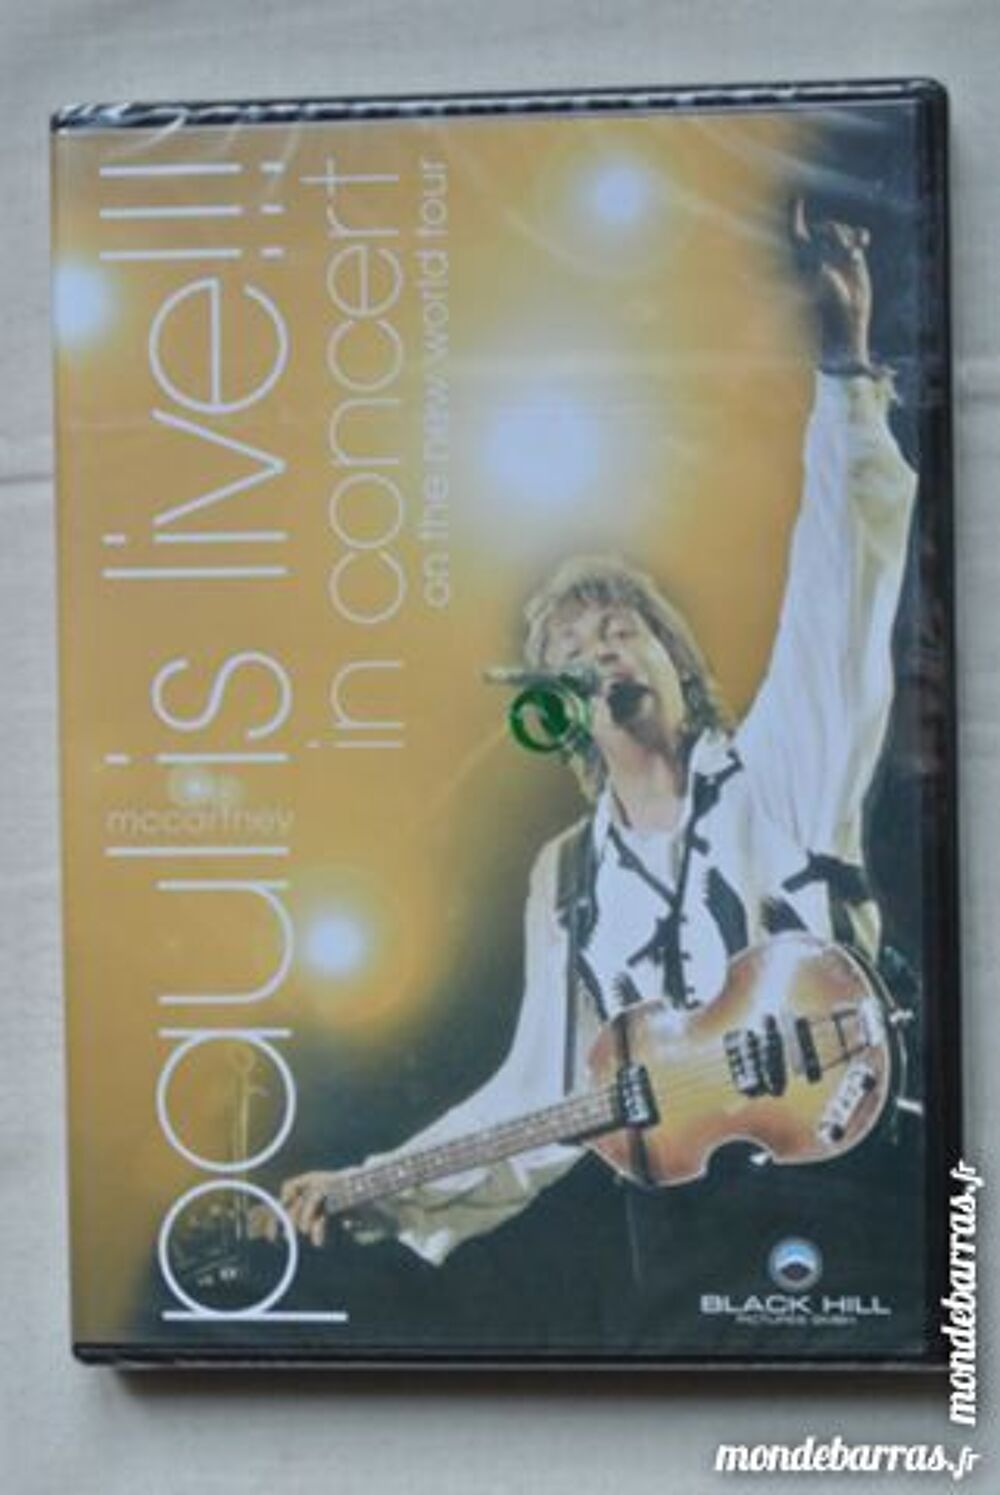 Paul Mac Cartney is live in concert ! DVD et blu-ray